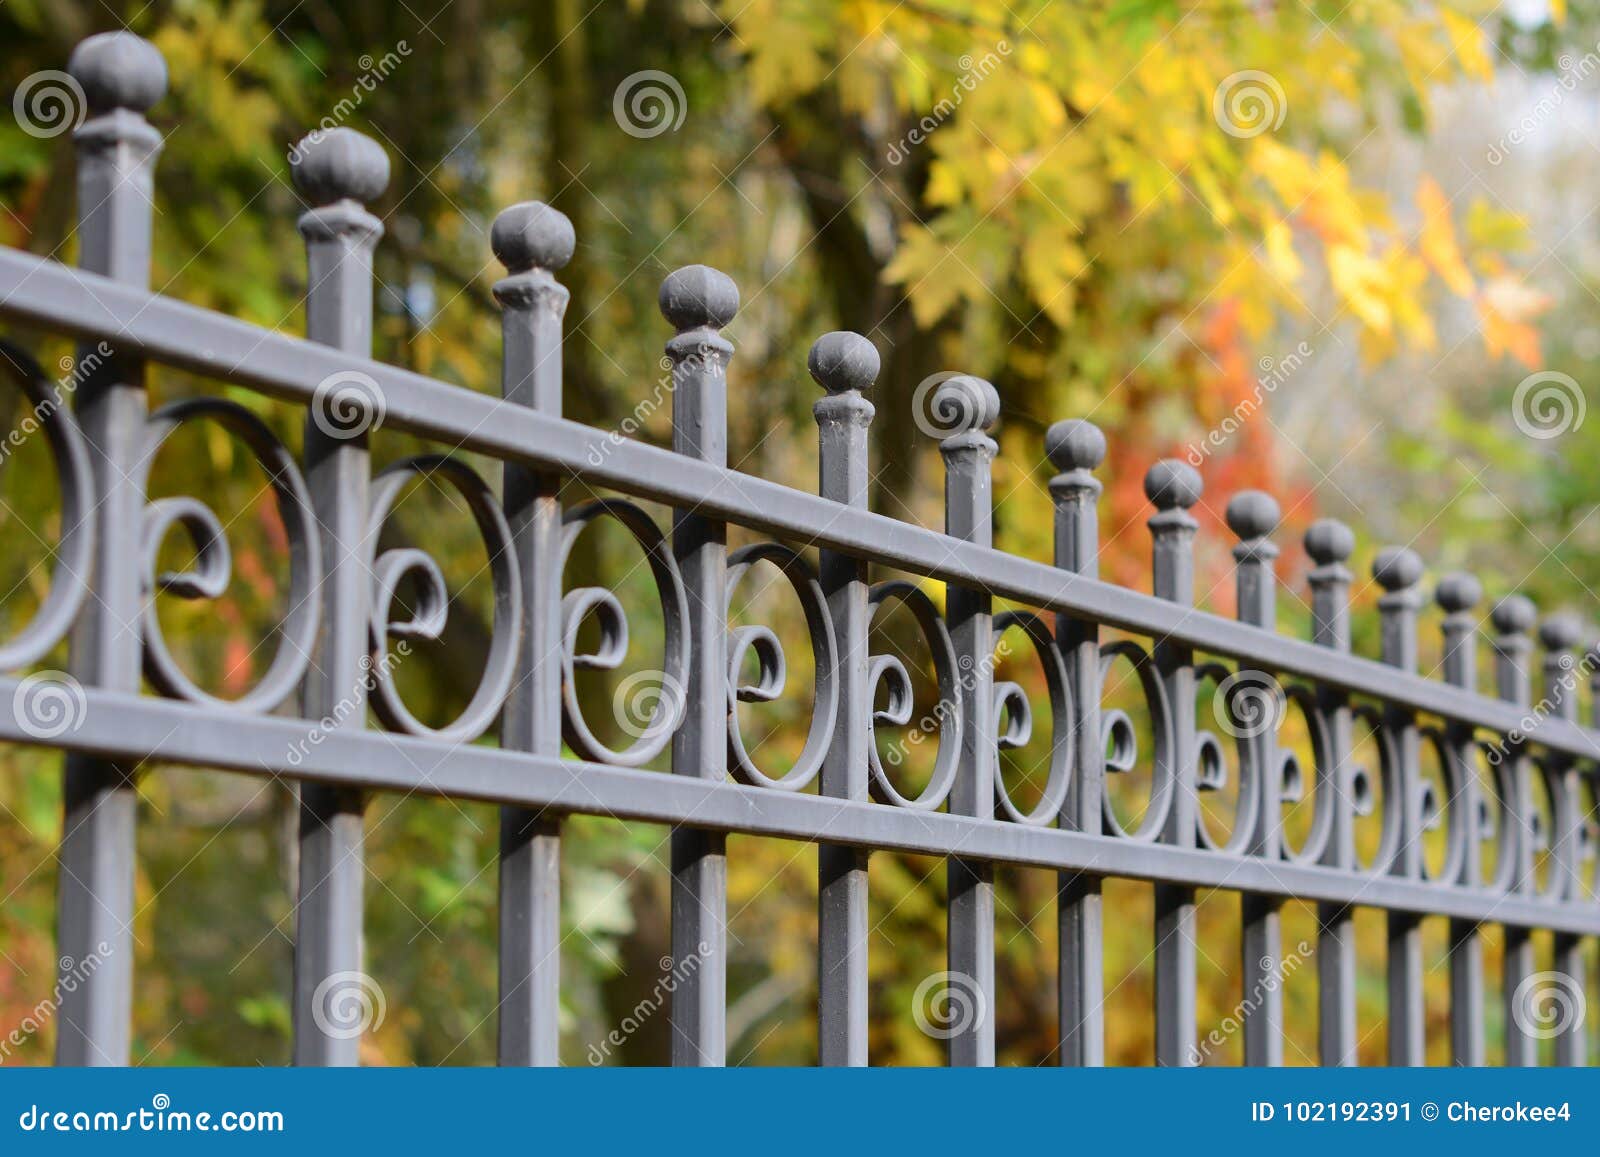 Schöner bearbeiteter Zaun Metallzaun-Abschluss oben Metall schmiedete Zaun schöner Zaun mit künstlerischem Schmieden